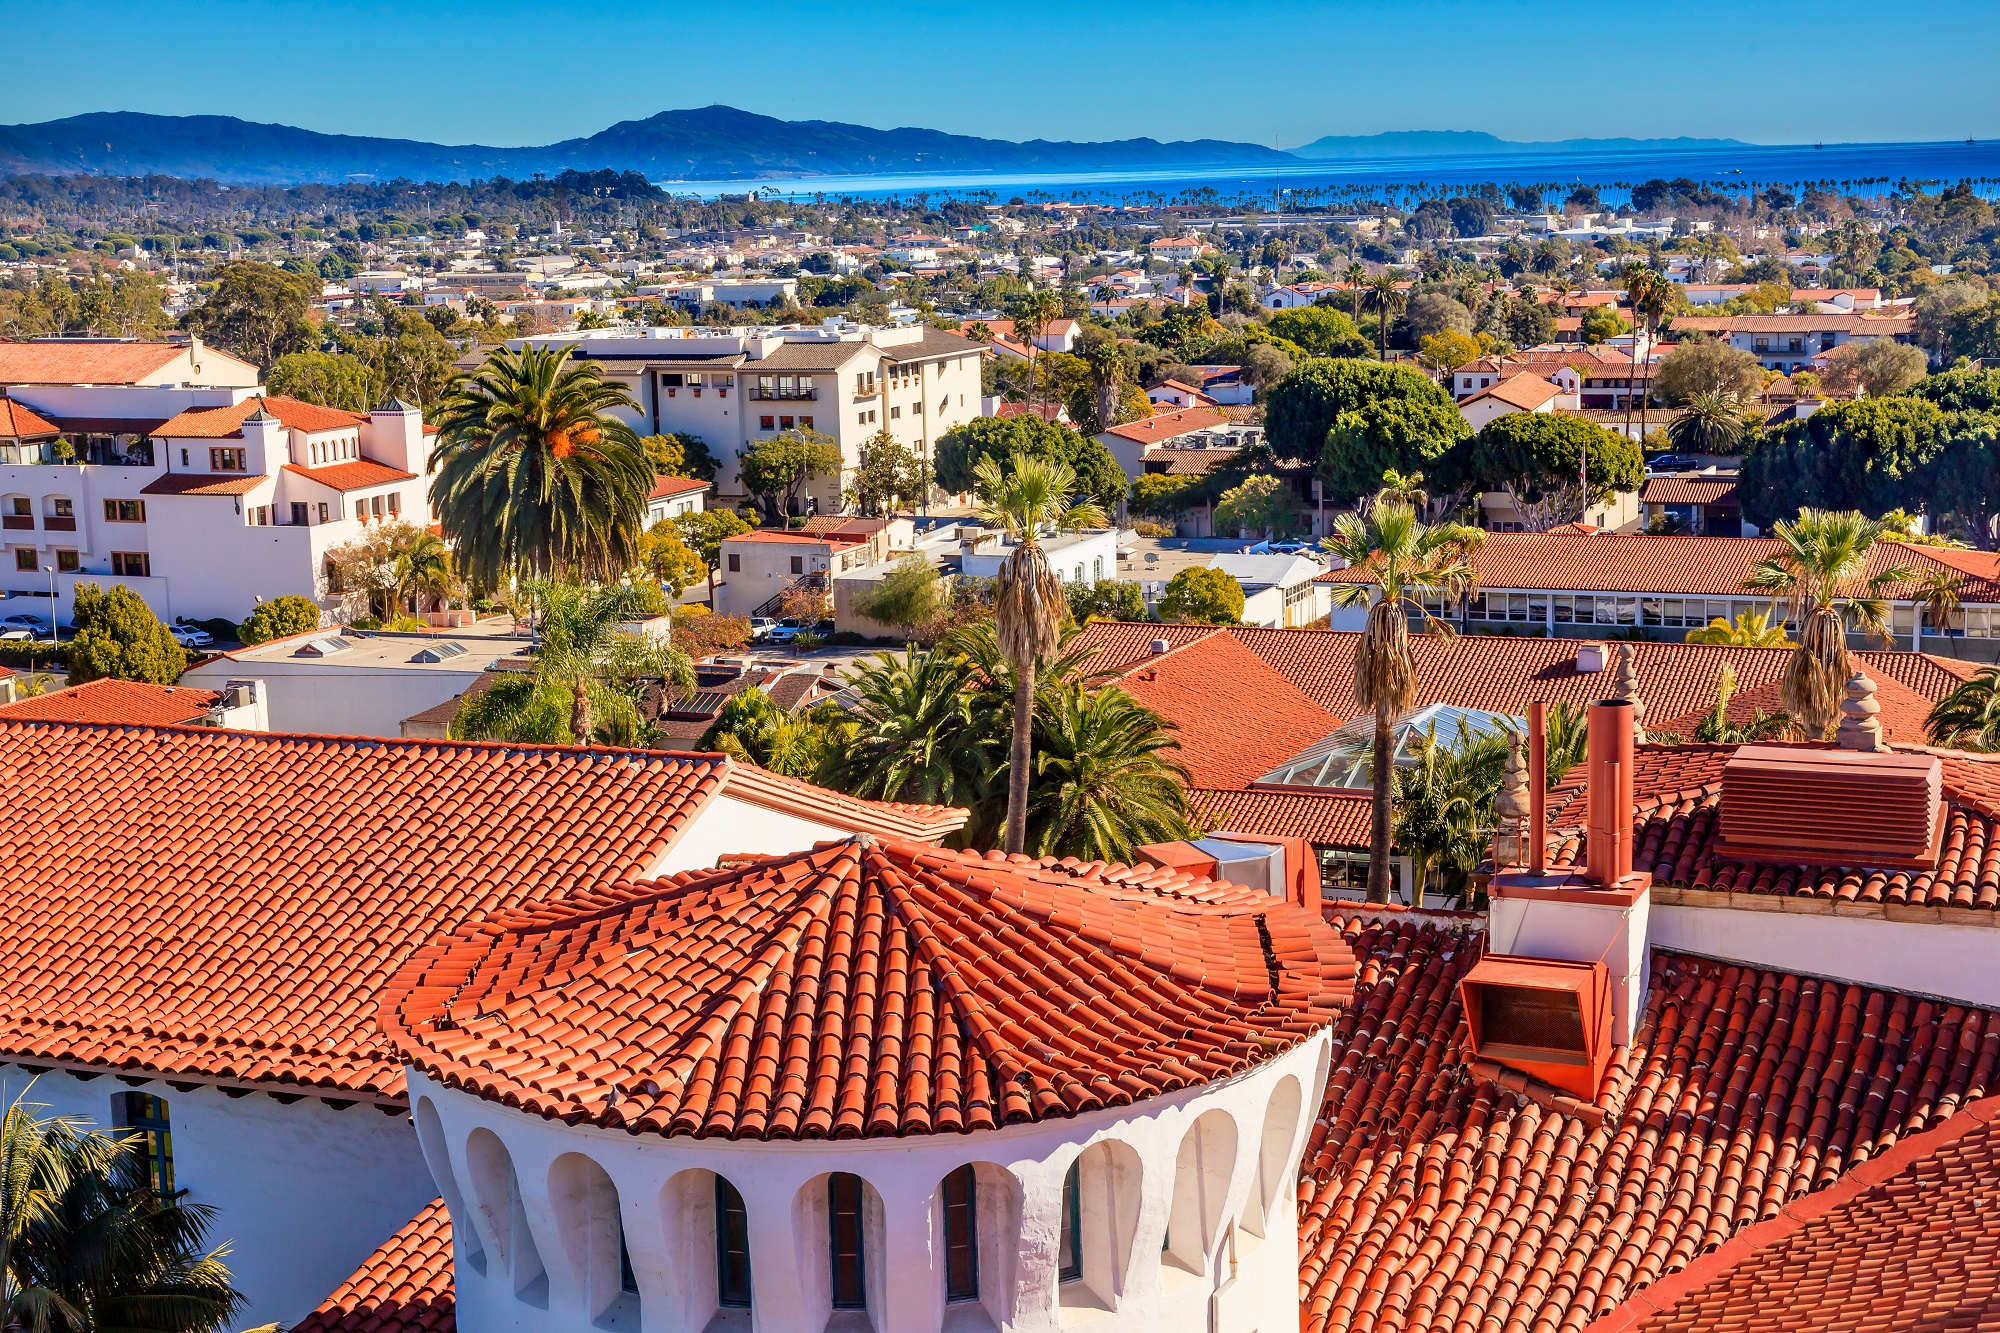 America's Riviera - Santa Barbara (Copy)